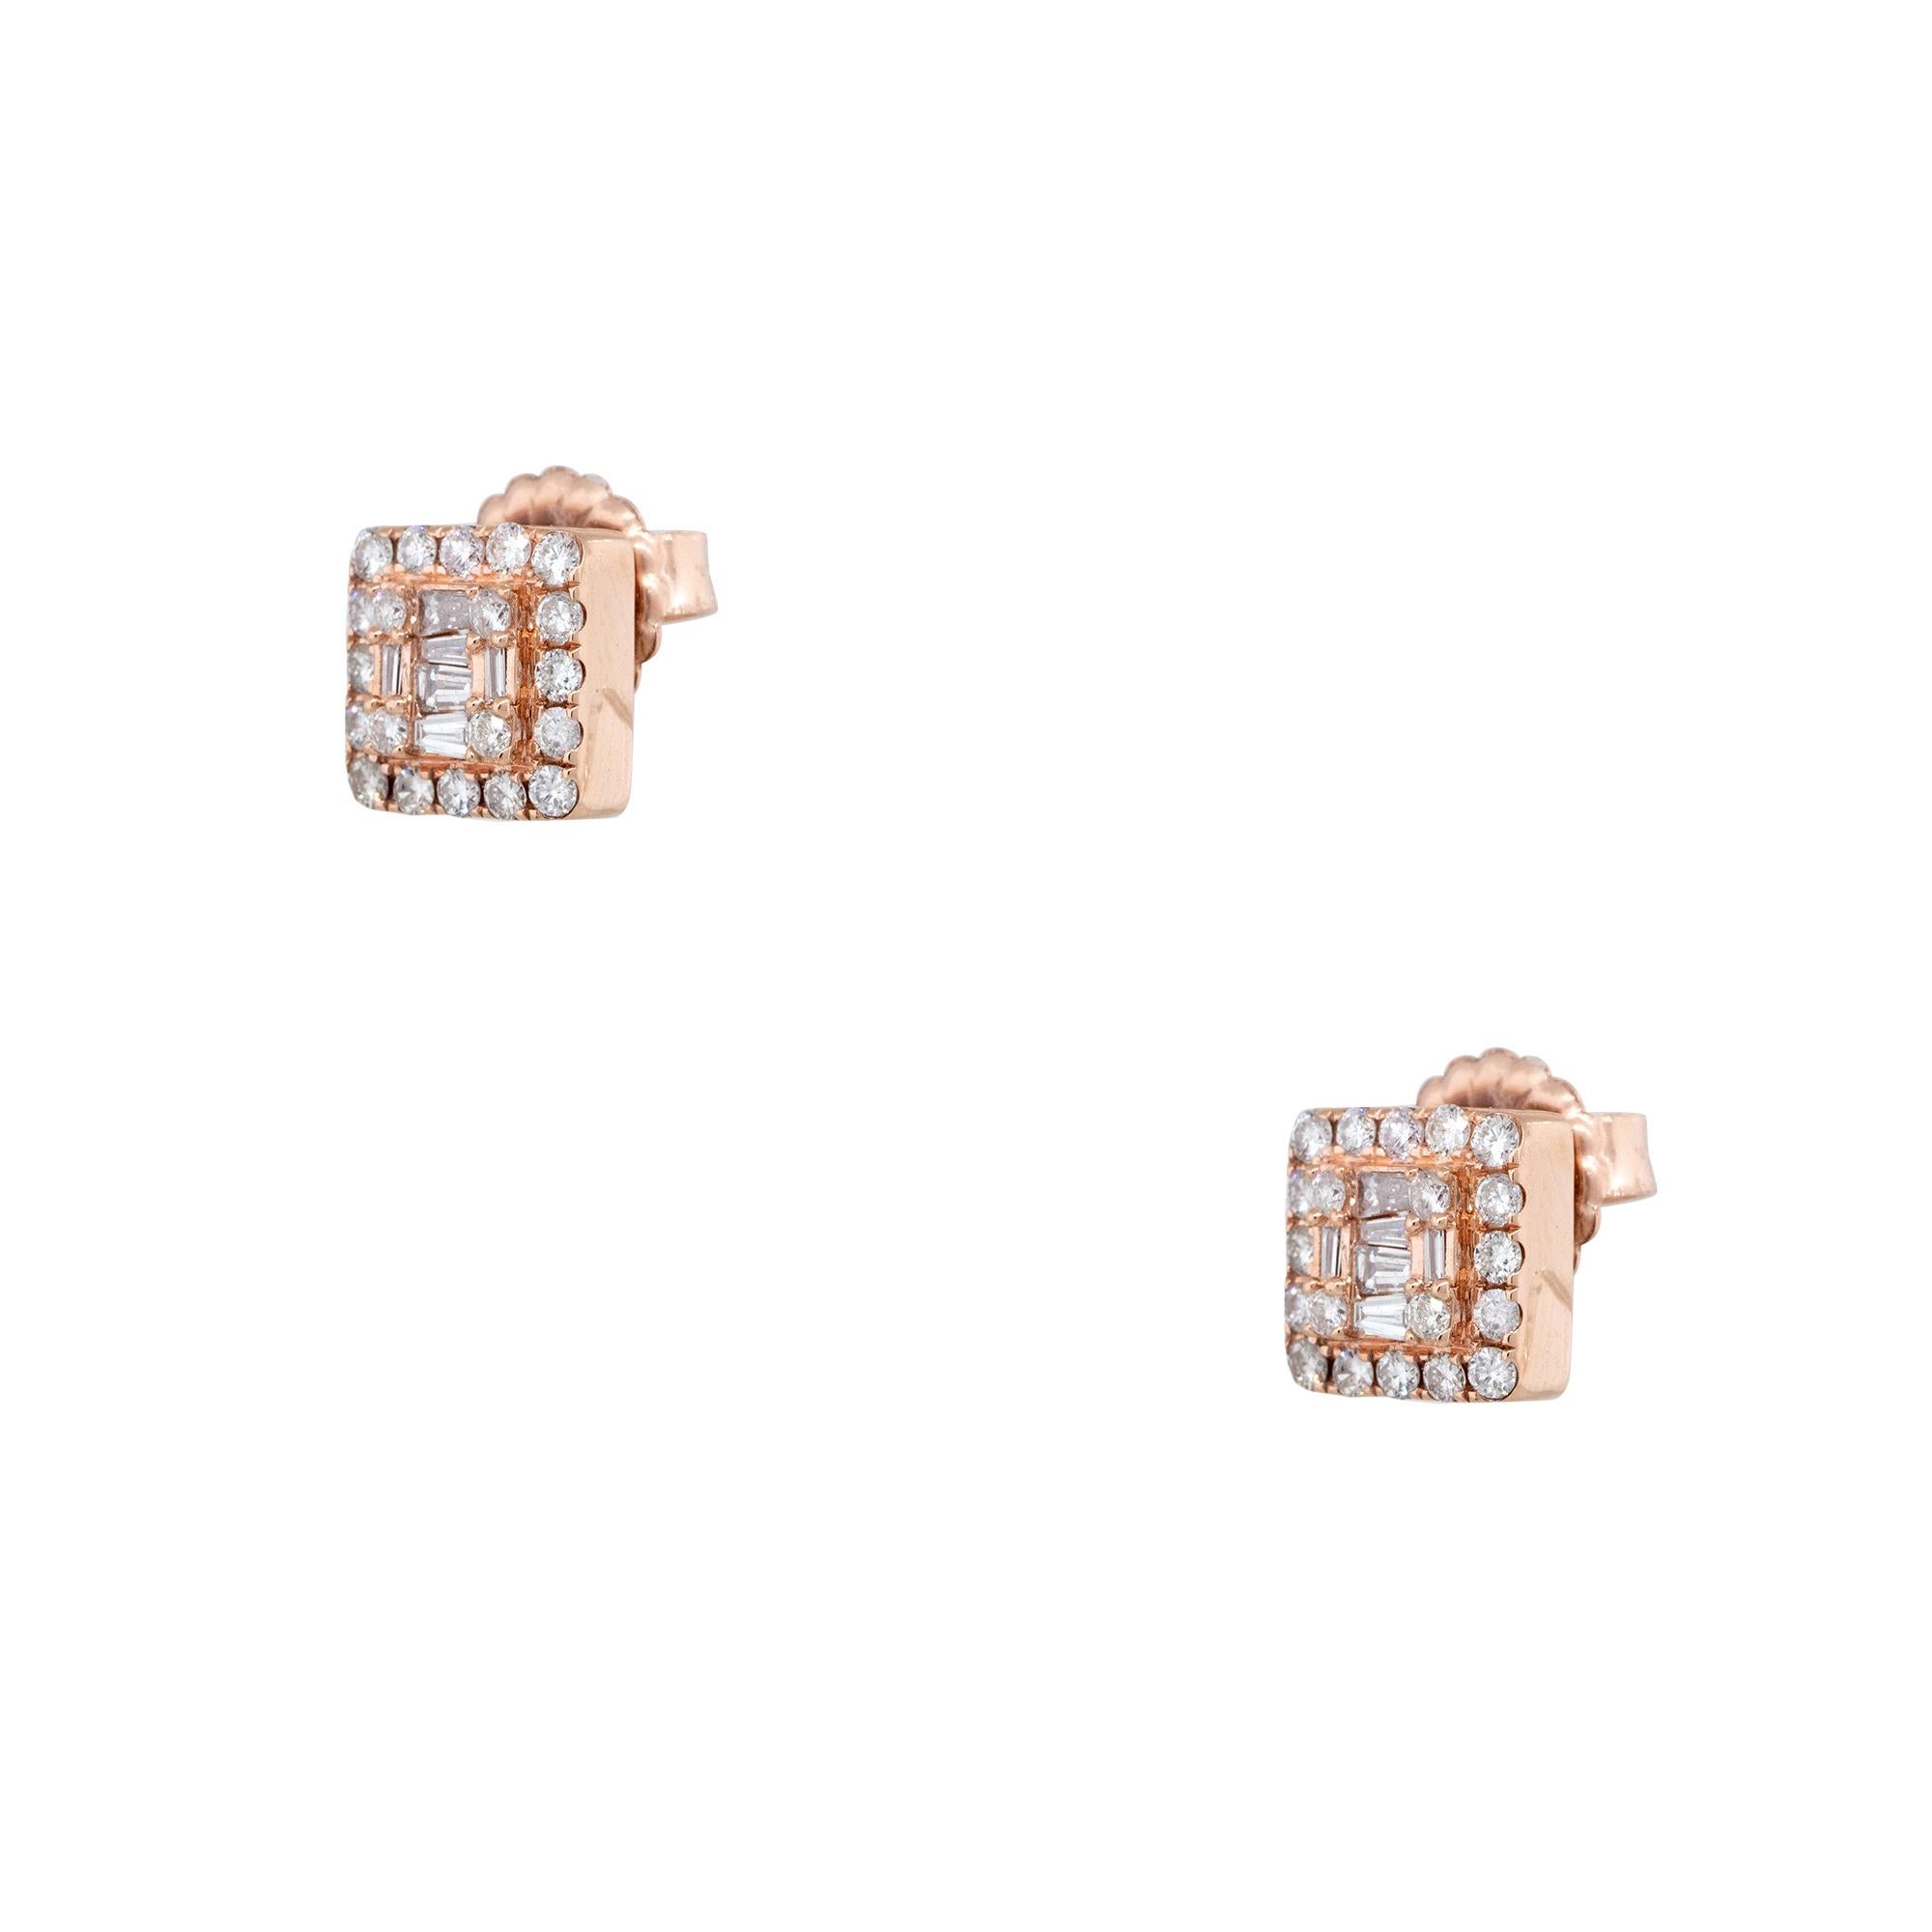 Round Cut 0.74 carat Round Brilliant & Baguette Cut Diamond Earrings 14 Karat In Stock For Sale